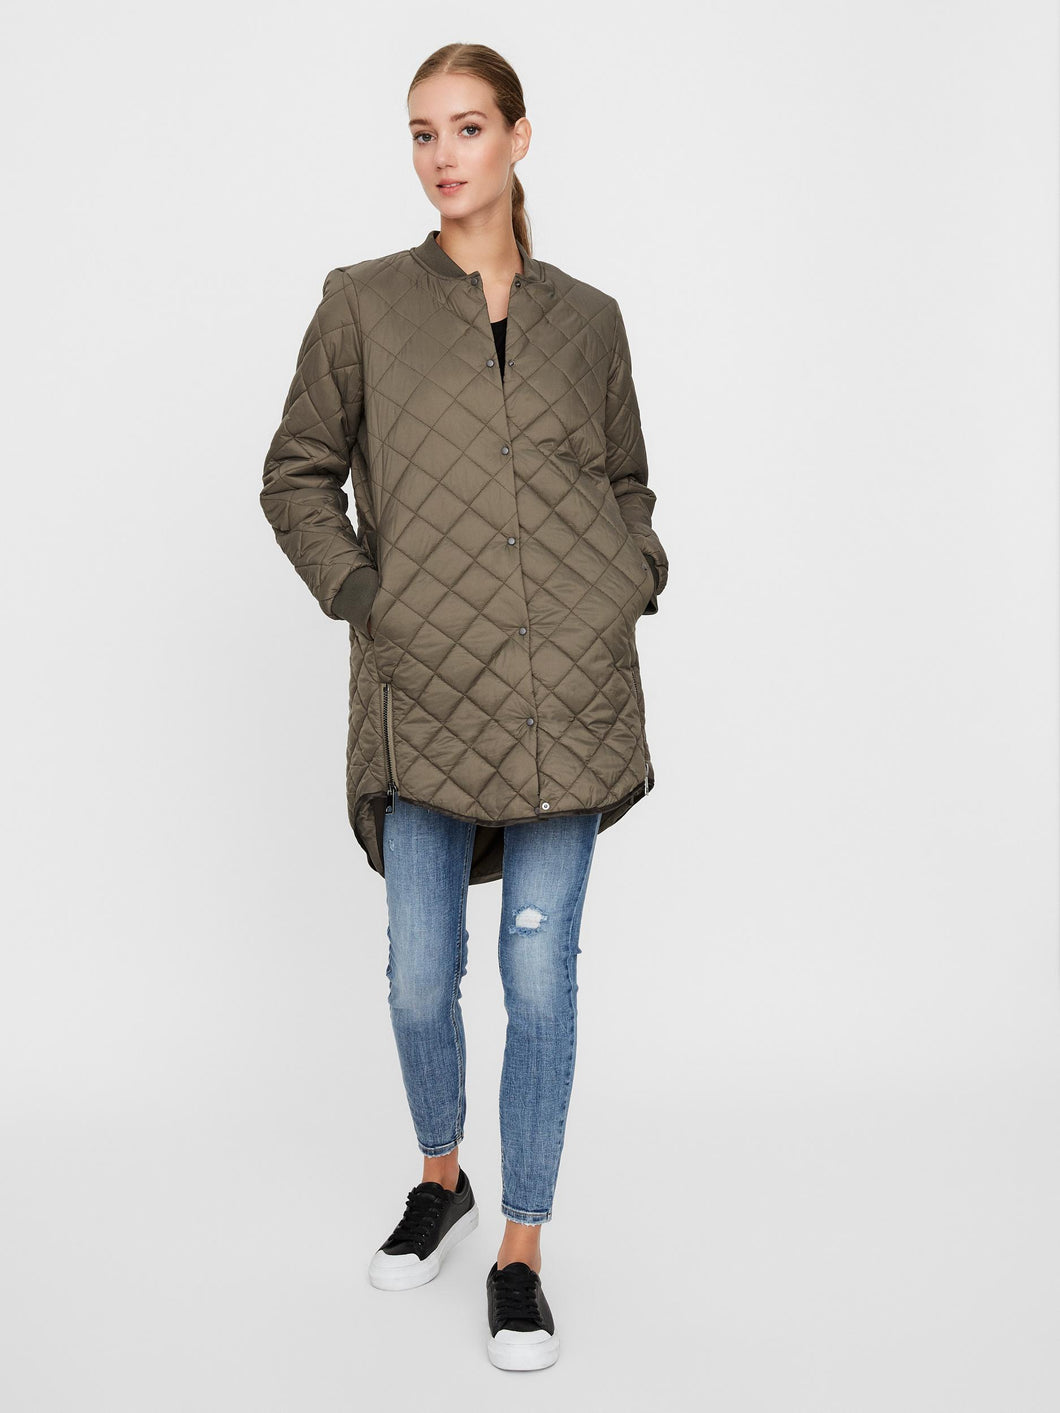 Vero Moda 3/4 Quilt Jacket - Bungee Cord